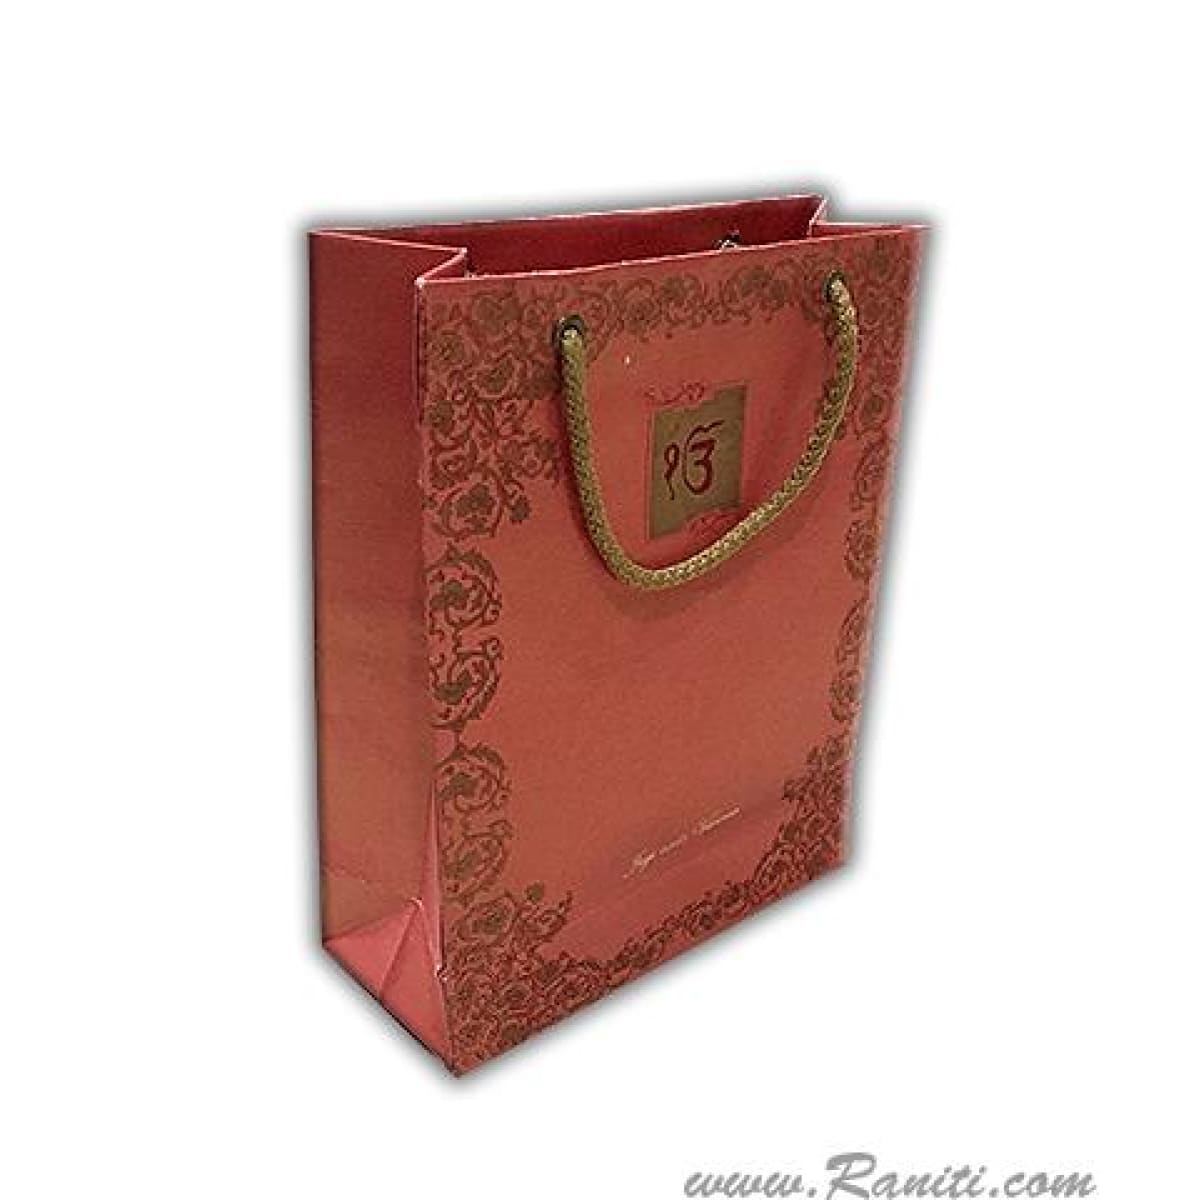 Elegant Personalized Paper Bag - Custom Wedding Gift bags AMGB-4